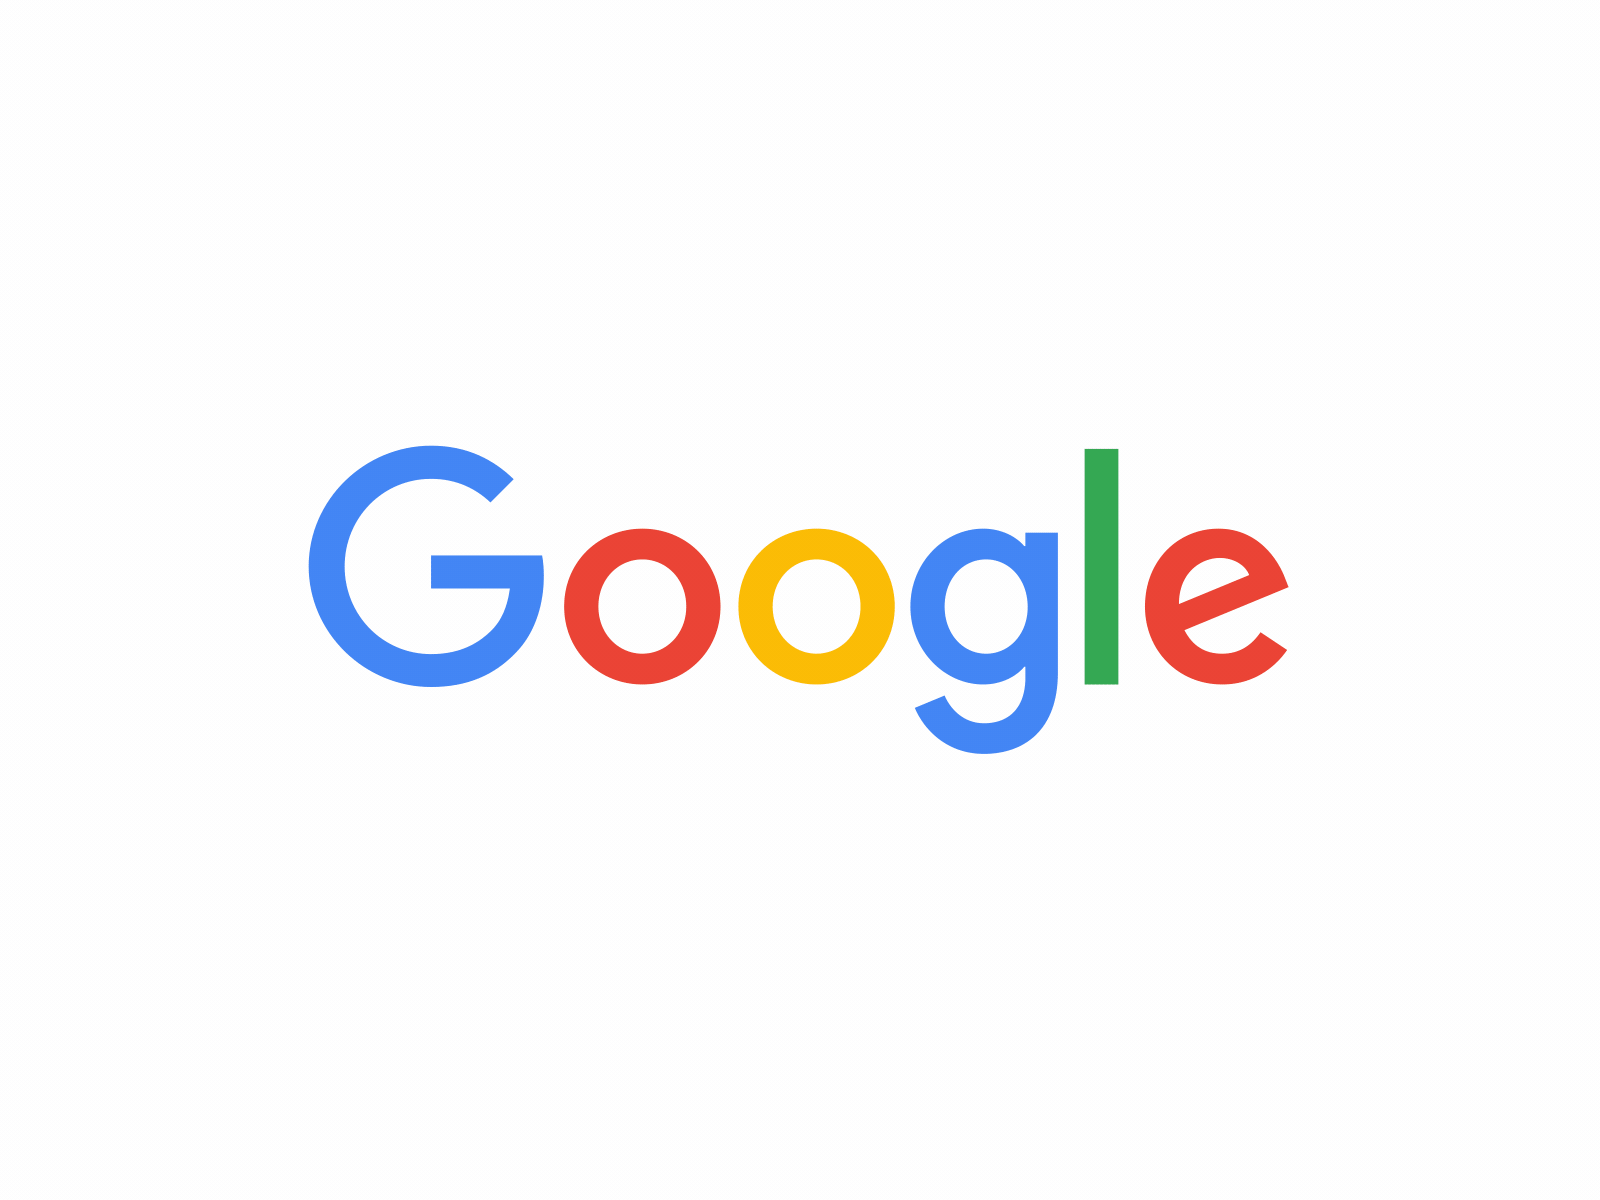 Google Doodle - 2021 Summer Olympics